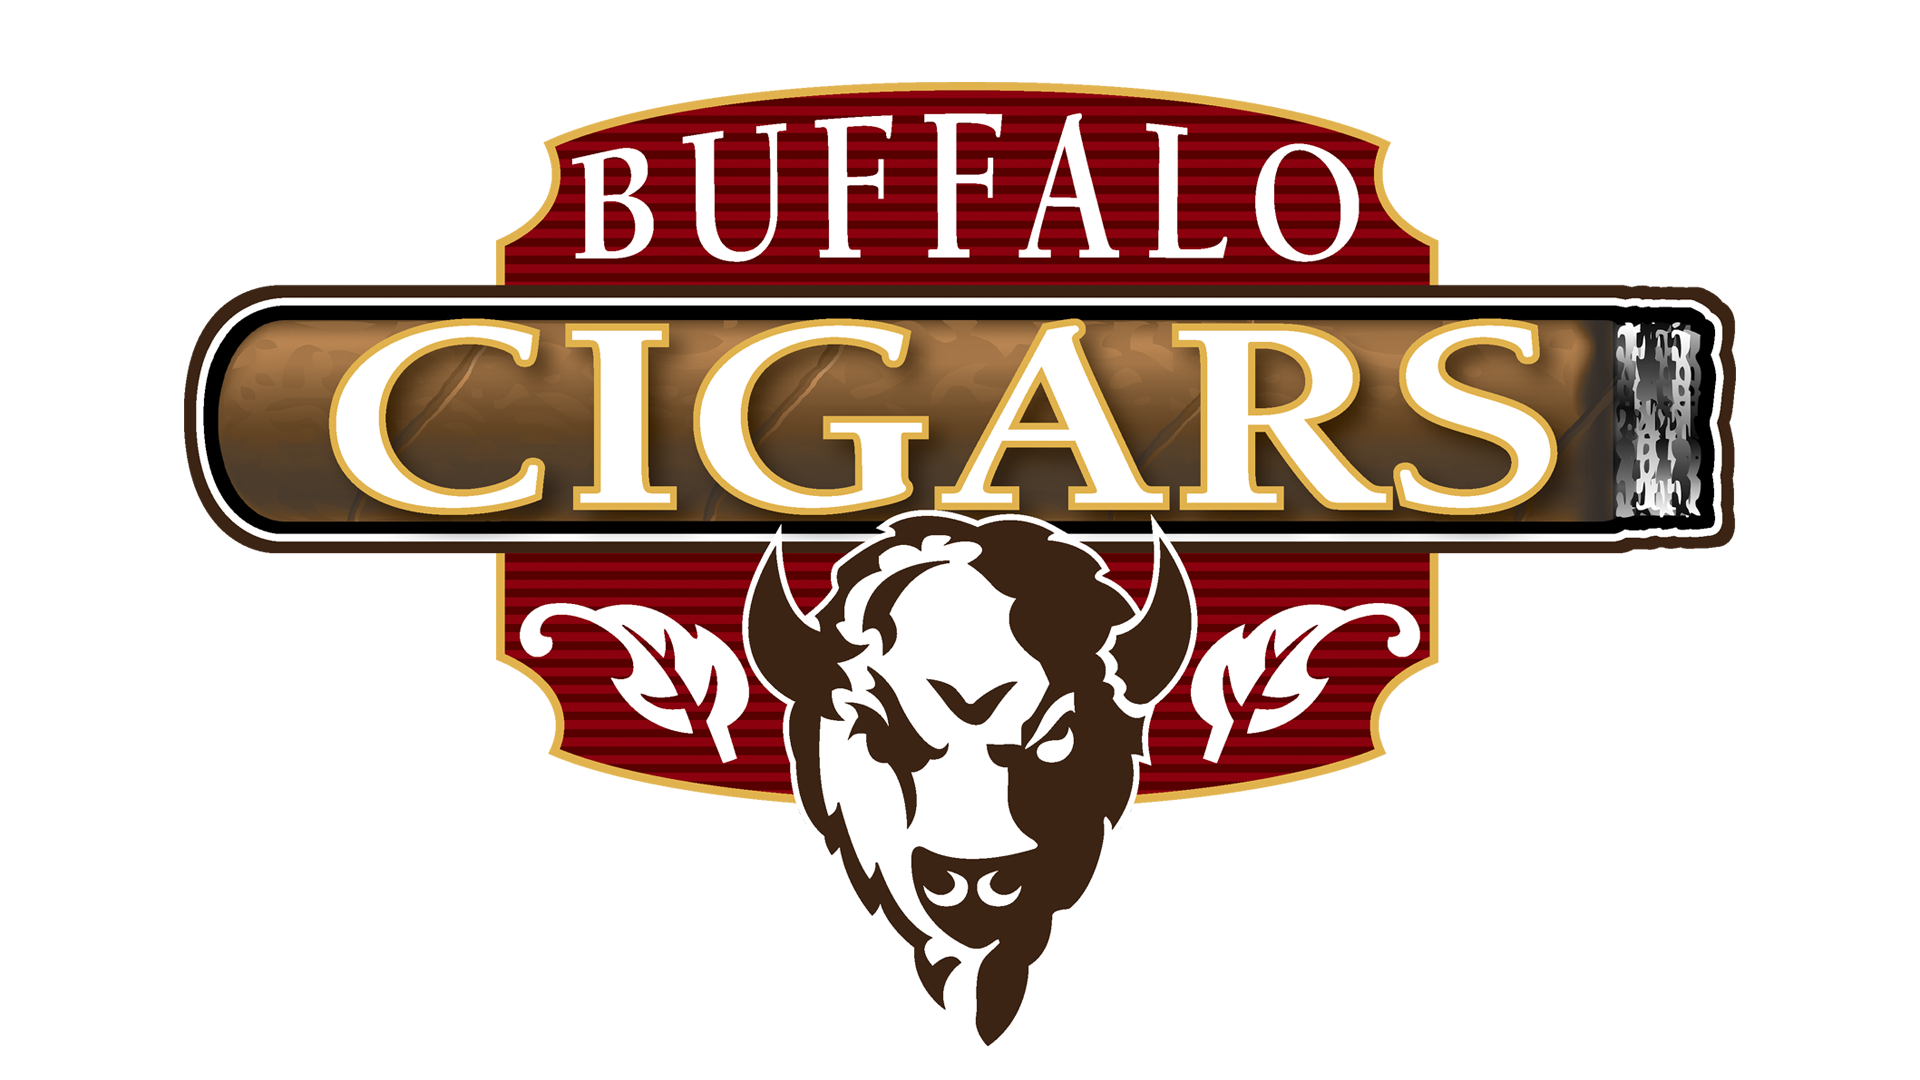 August 17 - Buffalo Cigar Fest